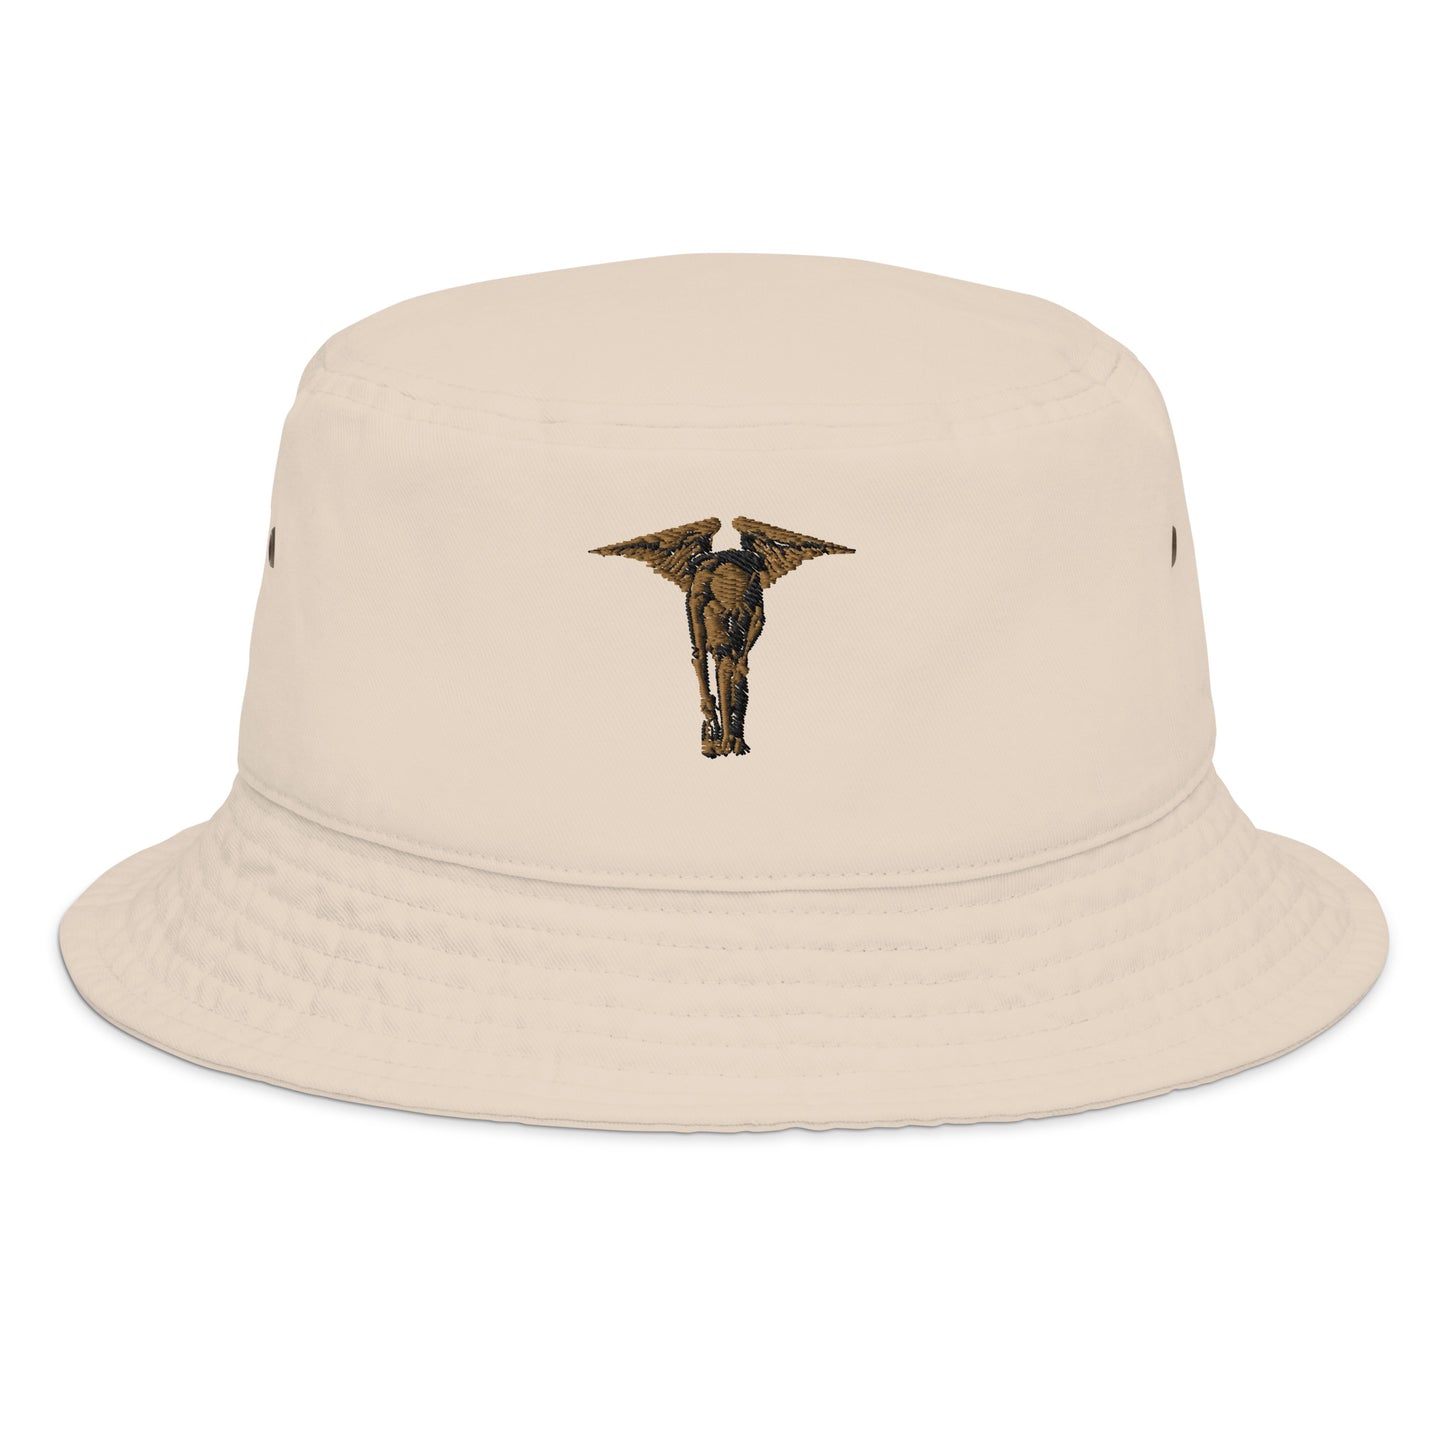 Gold Angel - Fashion bucket hat